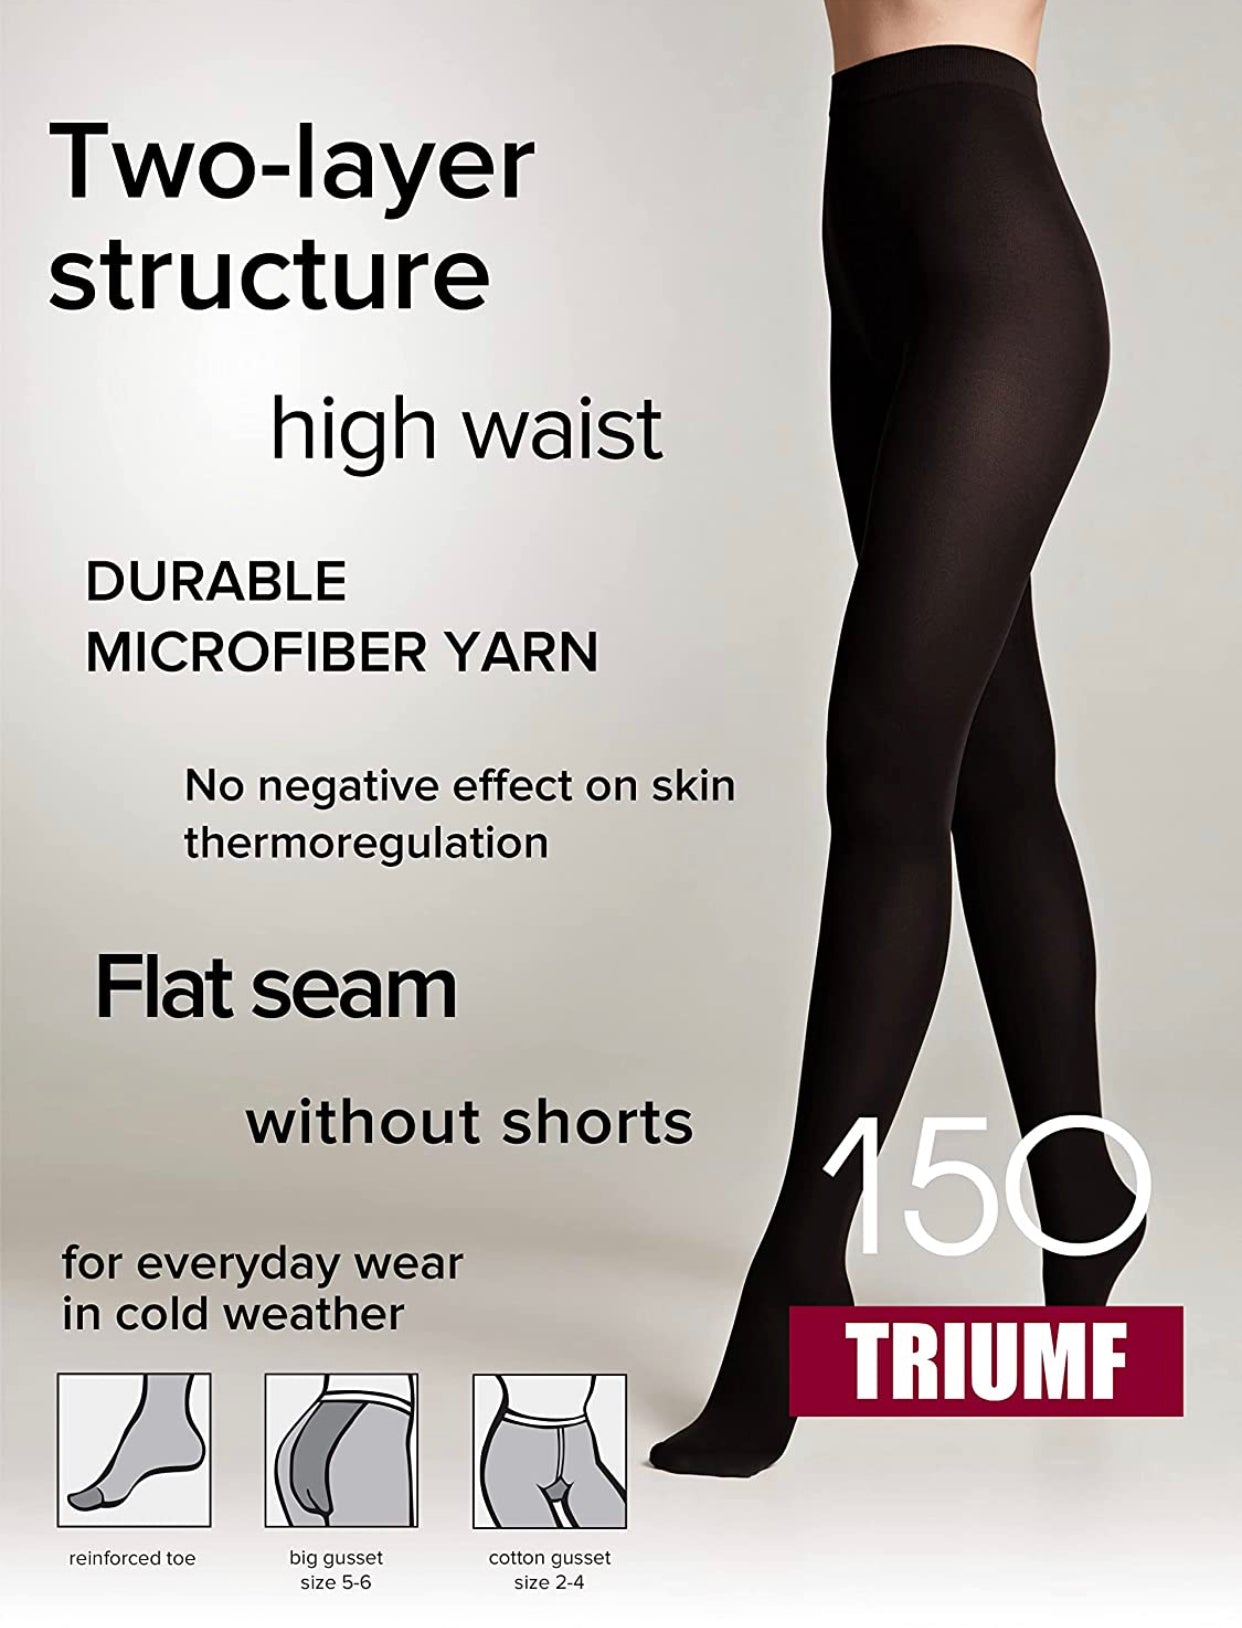 Conte Triumf 150 Den - Microfibra Warm Women's Tights (8С-57СП)